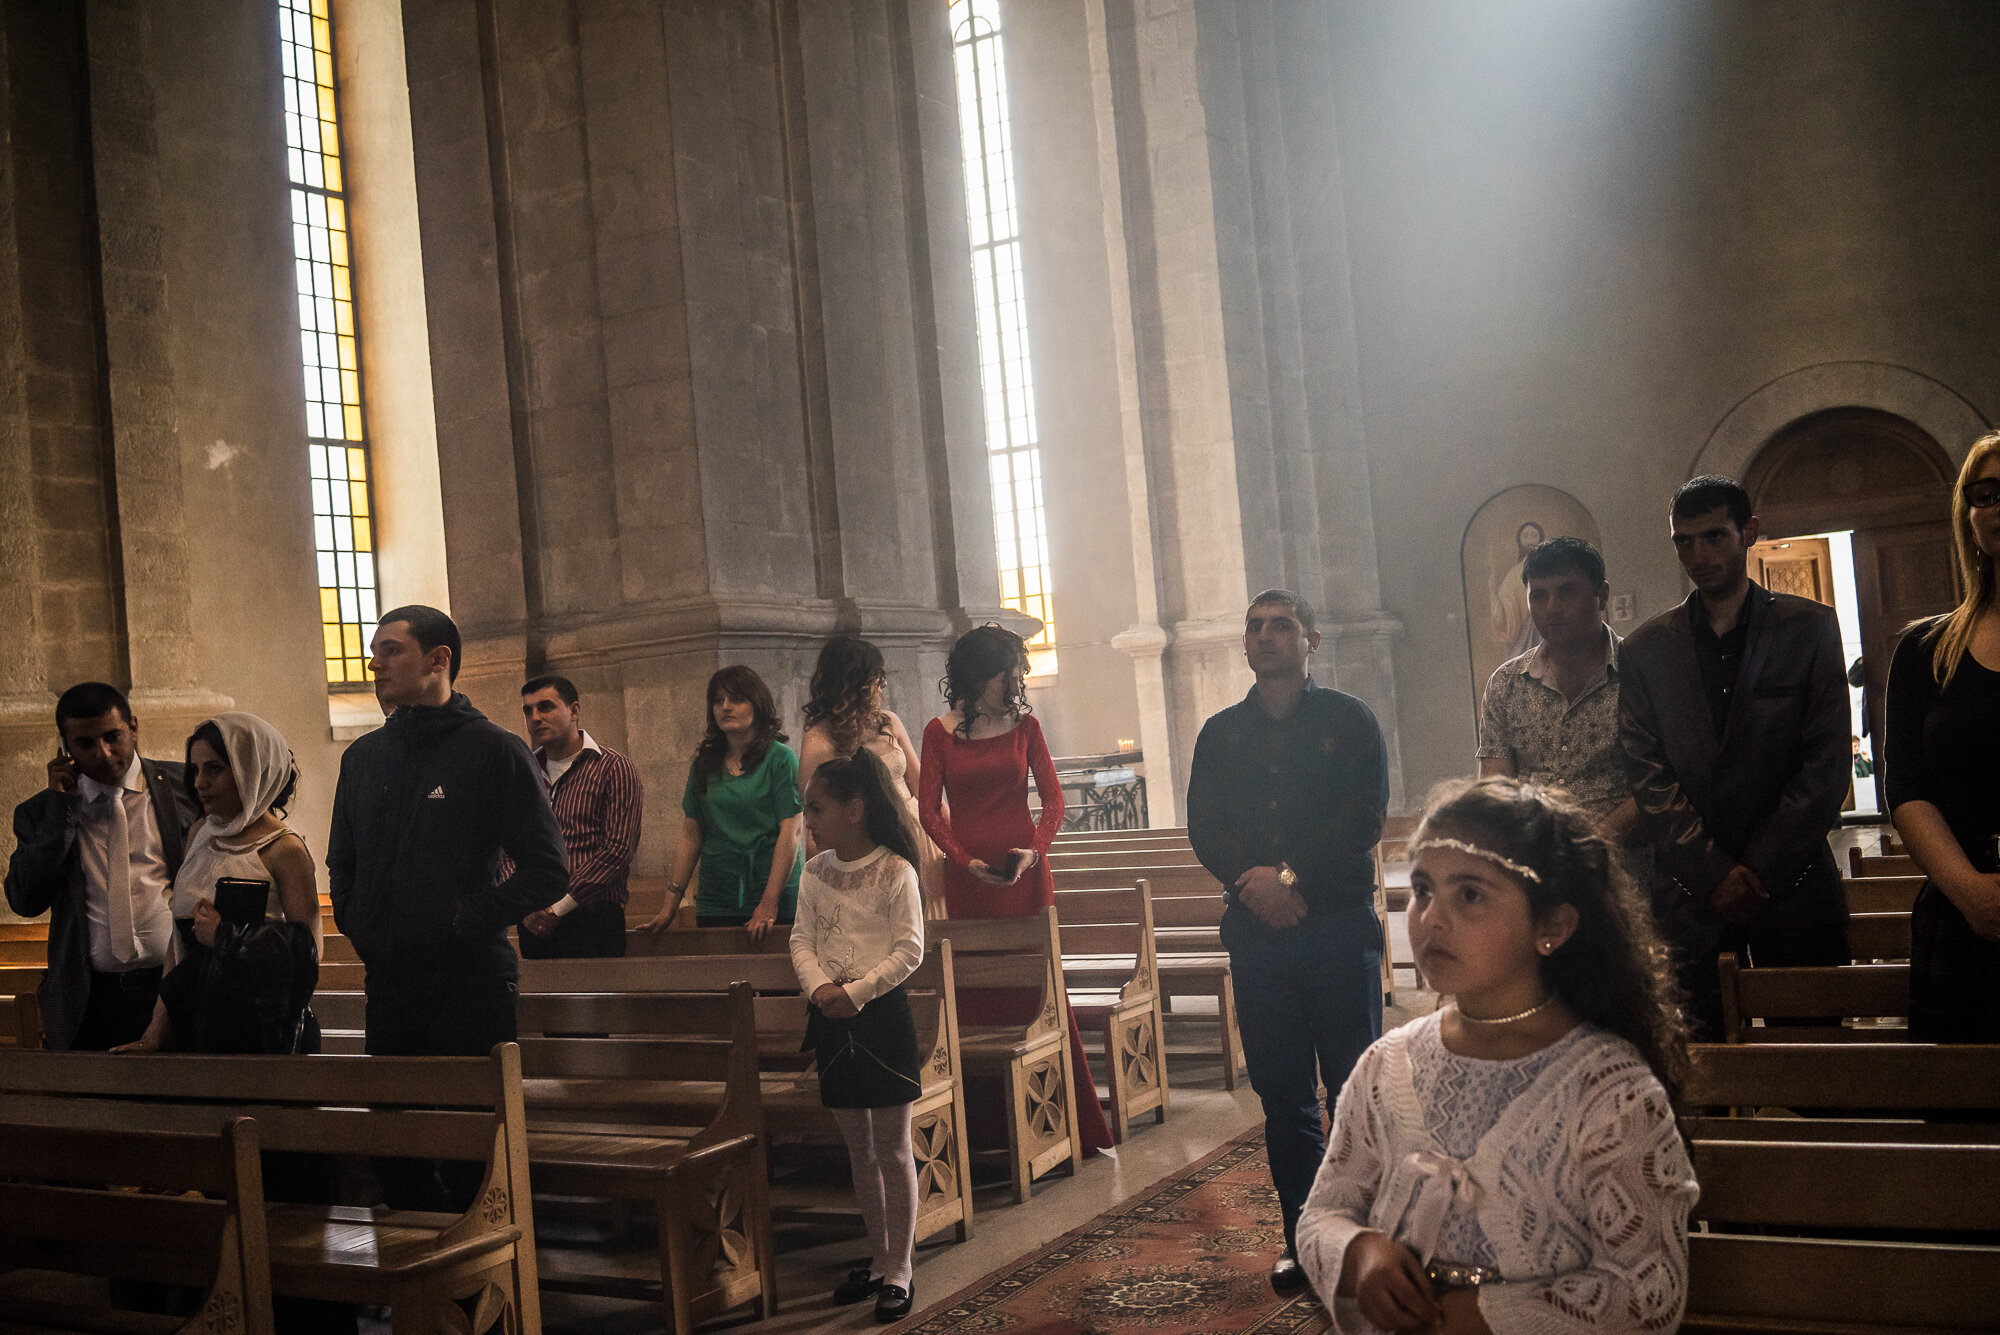  Guests attend the wedding of groom Davit Simonyan, 24, and bride Shogher Hovsepyan, 25, at Ghazanchetsots church. Shushi, Nagorno-Karabakh. 2015. 